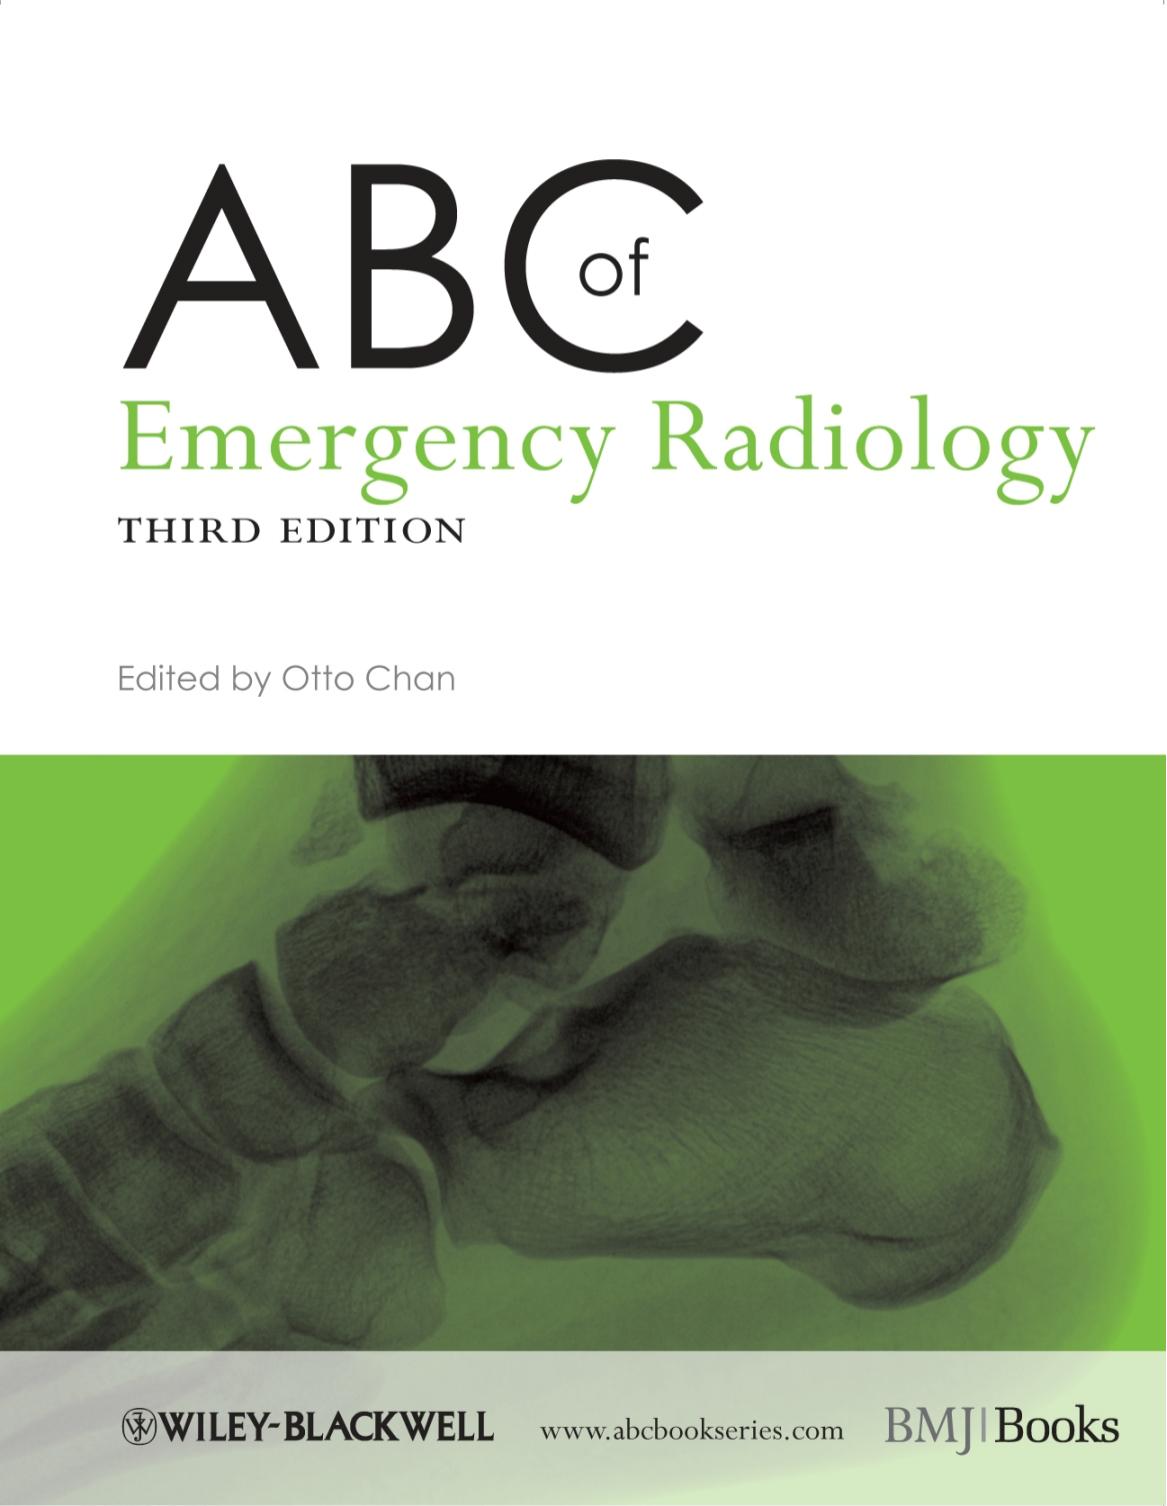 ABC of Emergency Radiology 3rd - Otto Chan.jpg